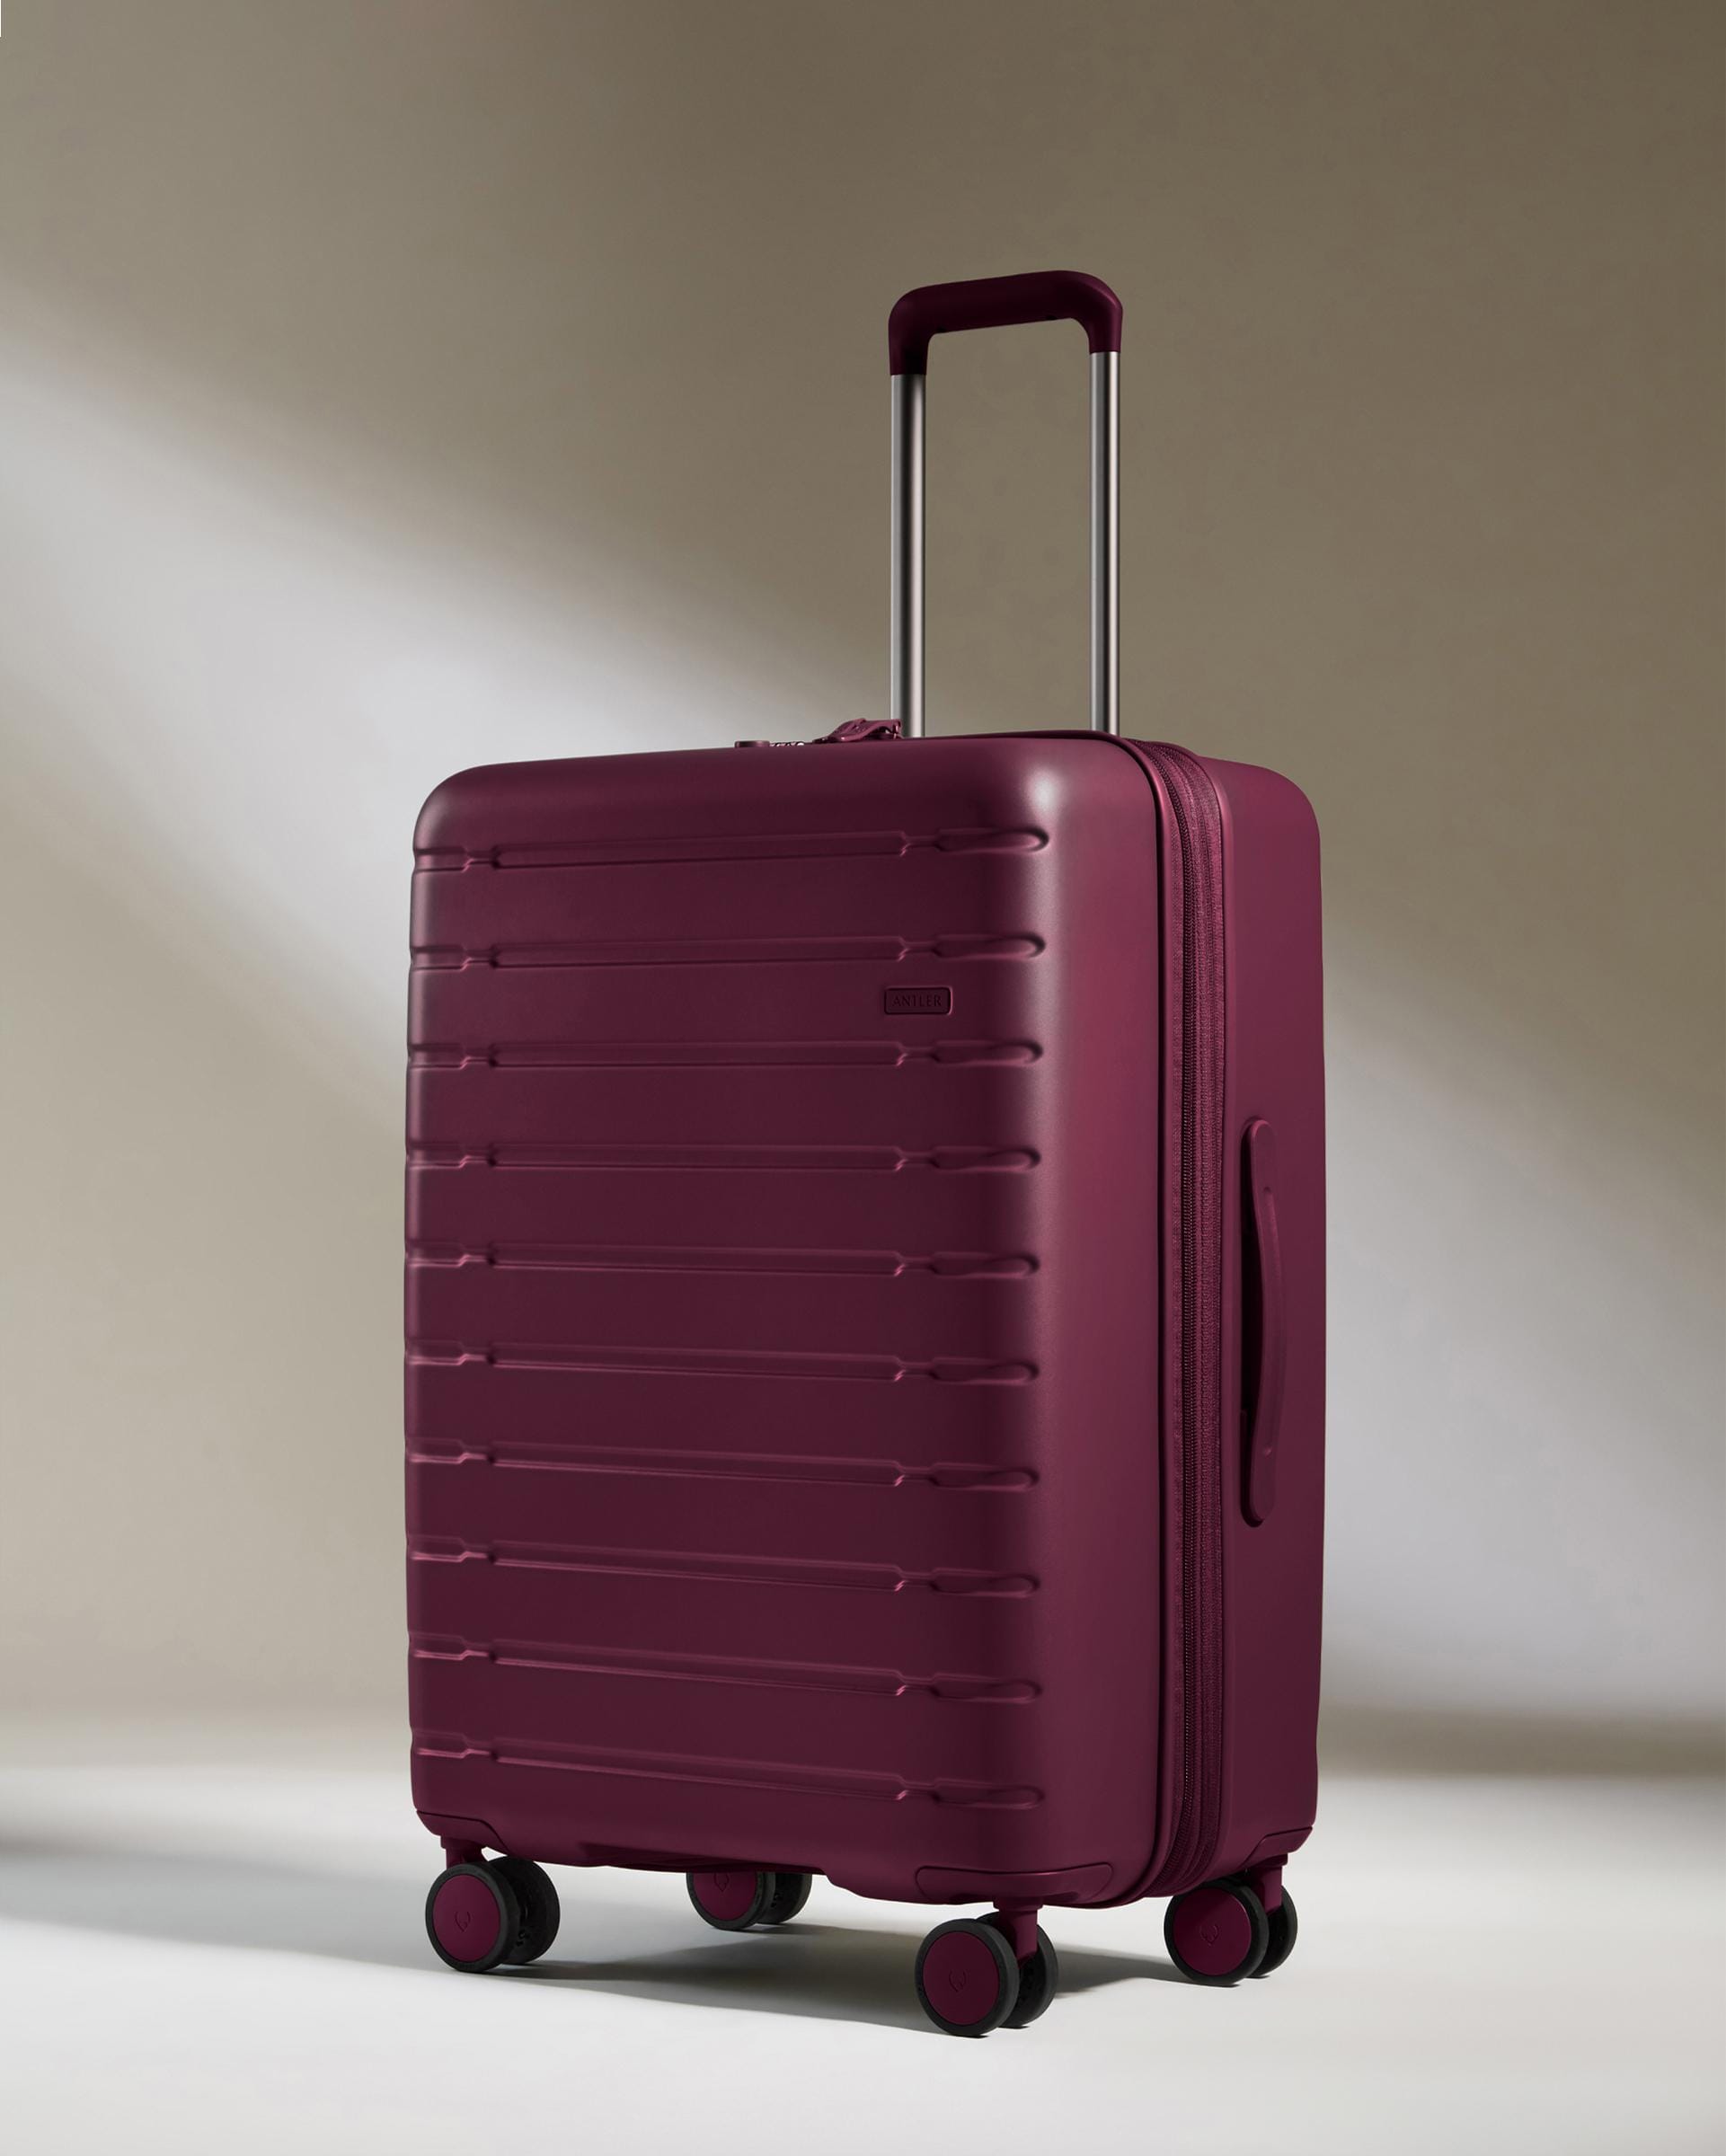 View Antler Stamford 20 Medium Suitcase In Berry Red Size 295cm x 48cm x 683cm information